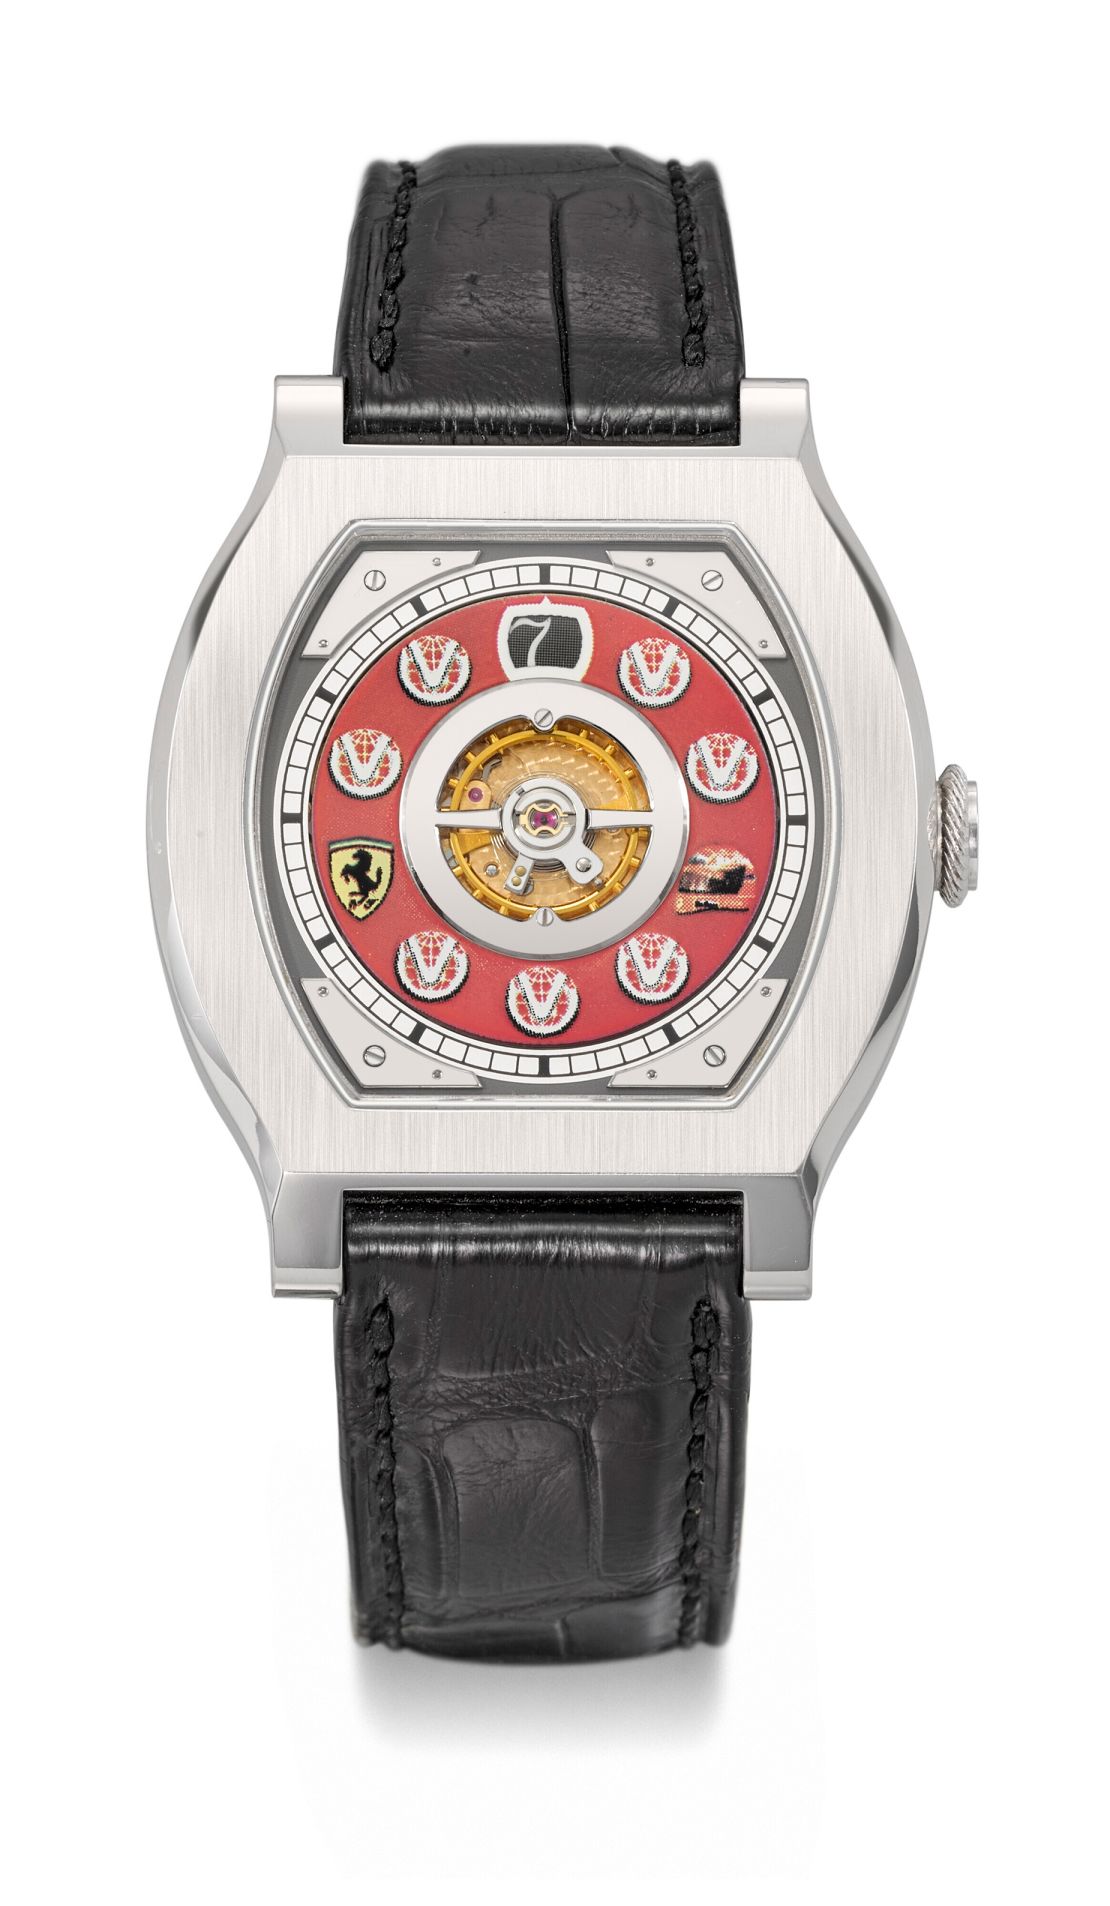 Legendary Formula 1 driver Michael Schumacher’s watch collection is ...